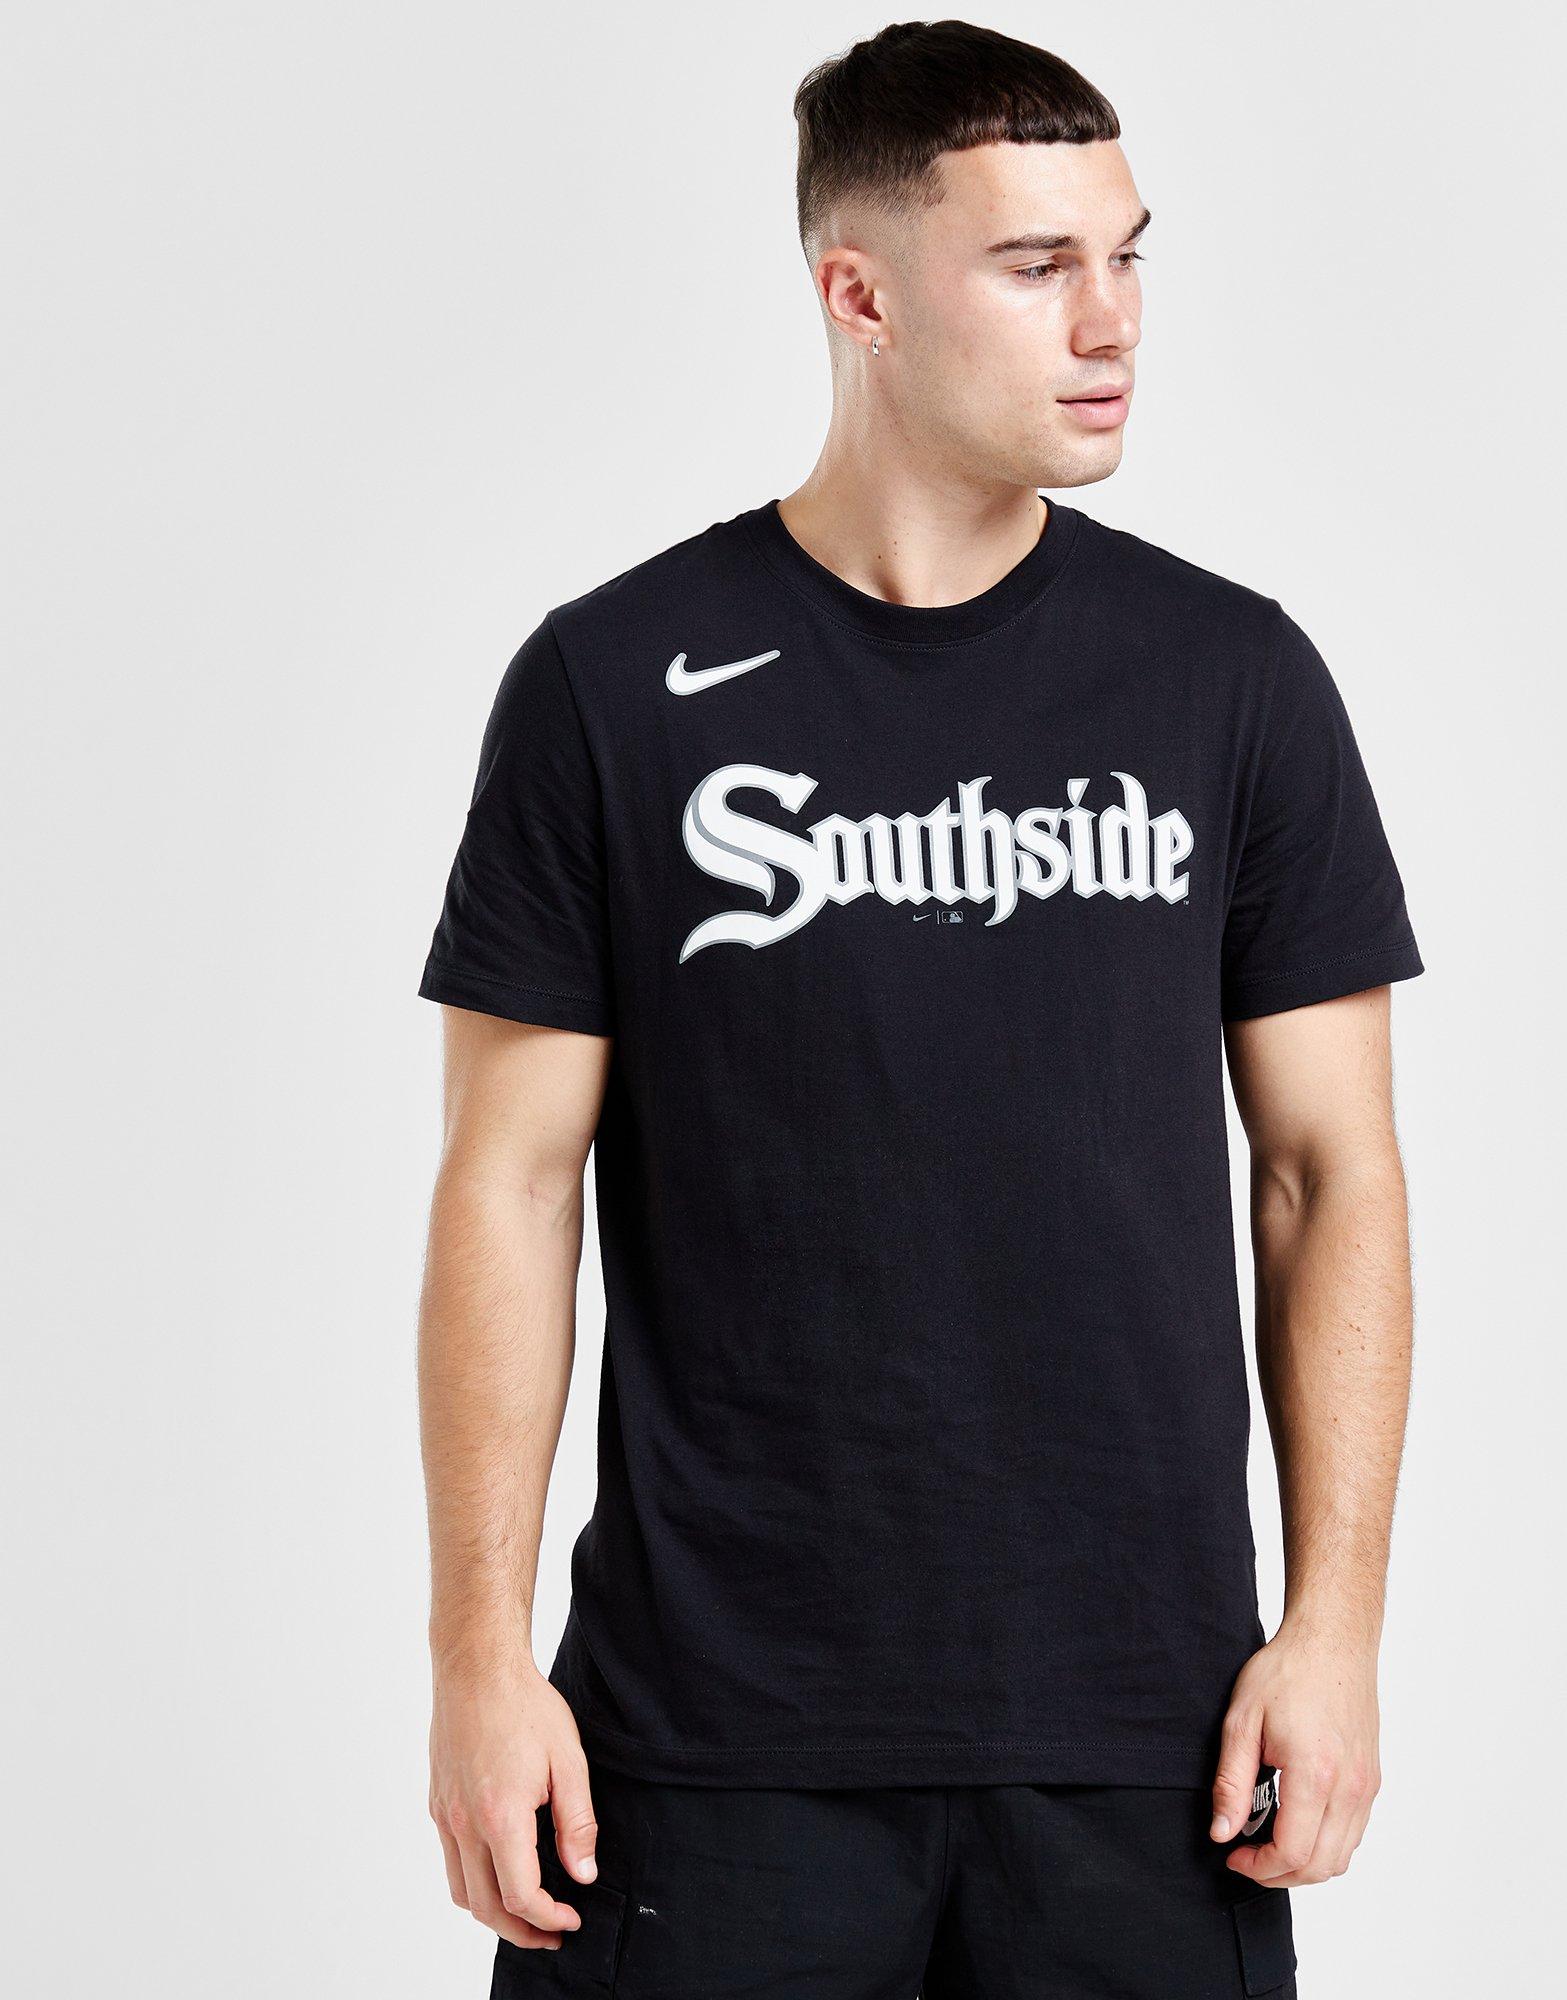 nike southside shirt